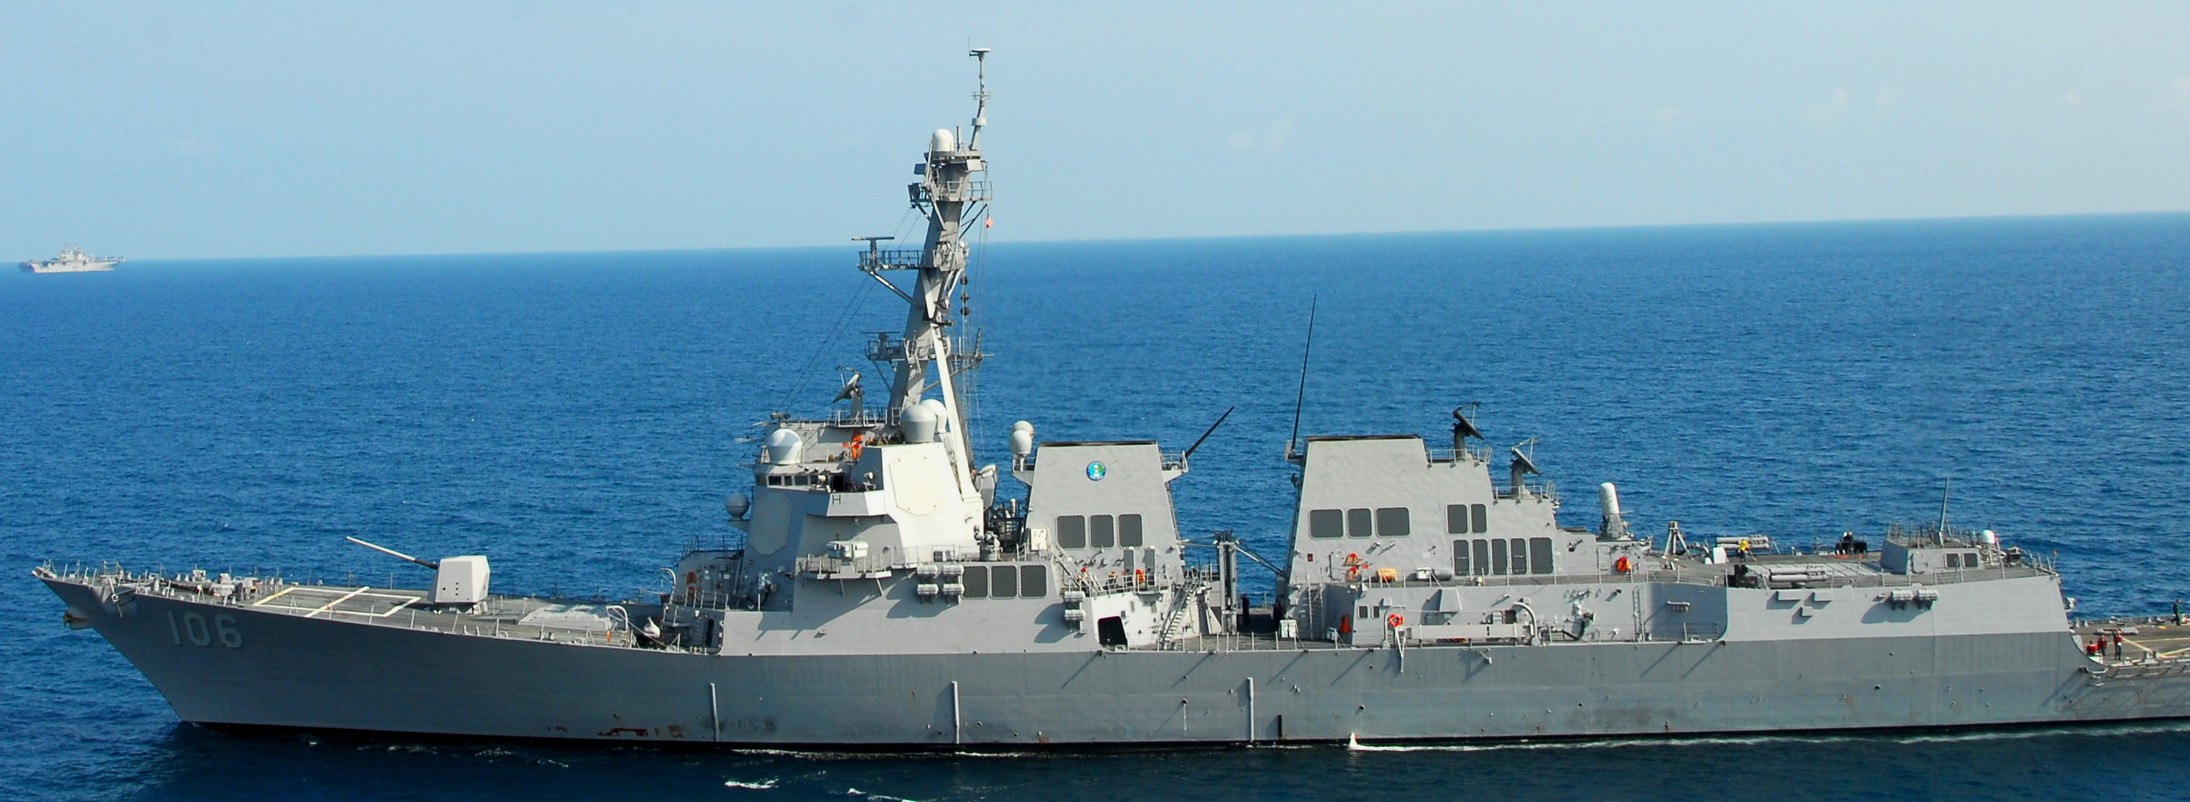 ddg-106 uss stockdale arleigh burke class guided missile destroyer aegis us navy exercise cobra gold thailand 55